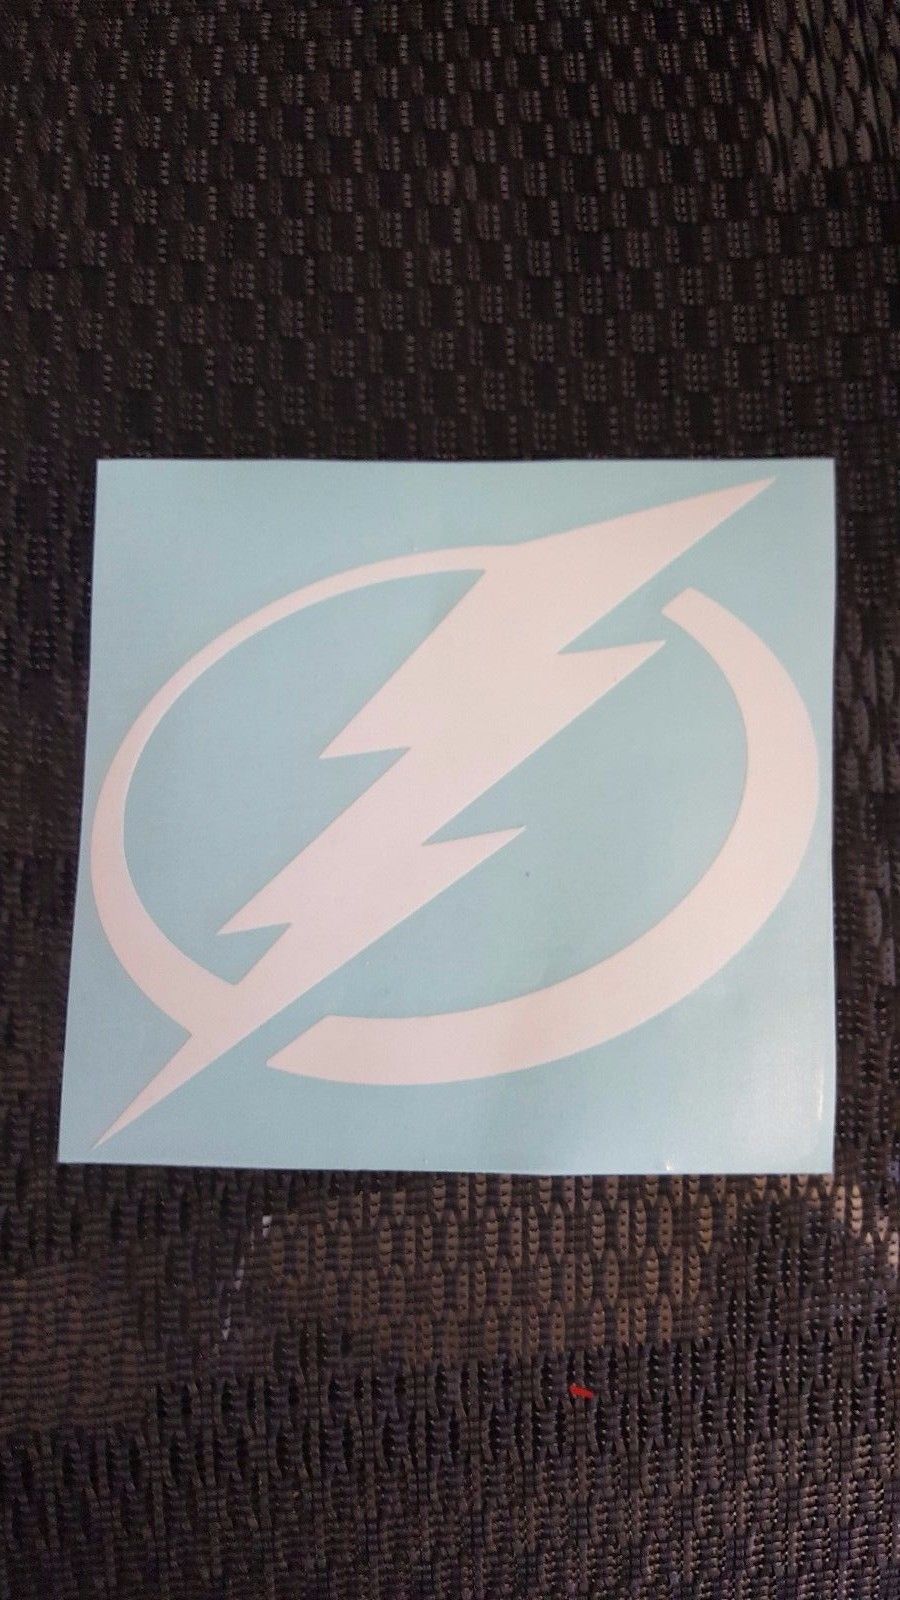 Tampa Bay Lightning Vinyl Decal